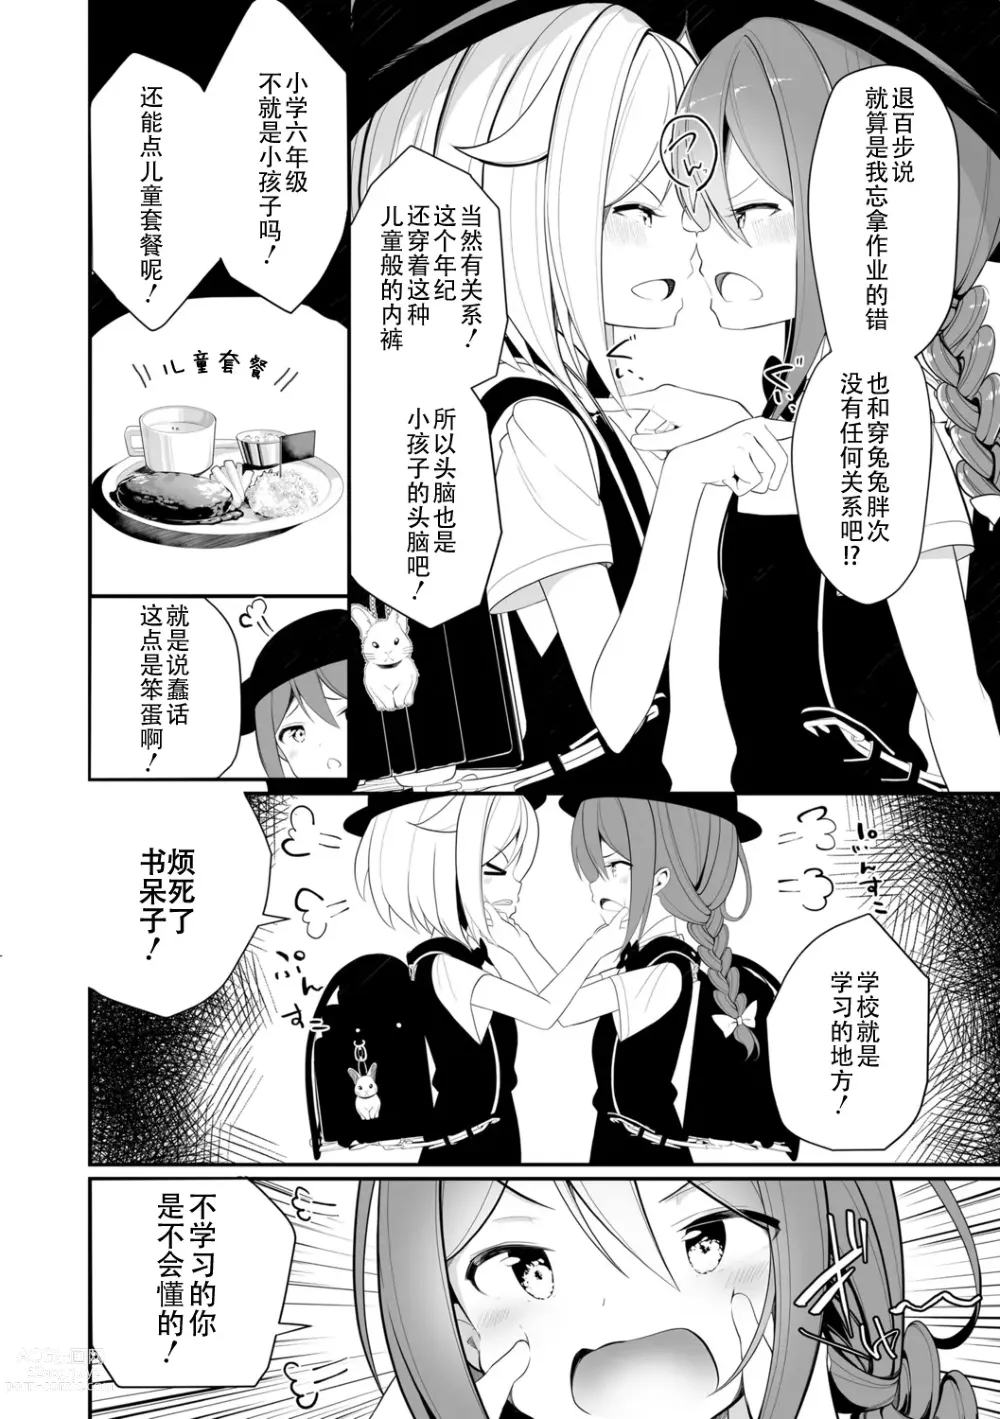 Page 4 of manga 越是吵架关系越好